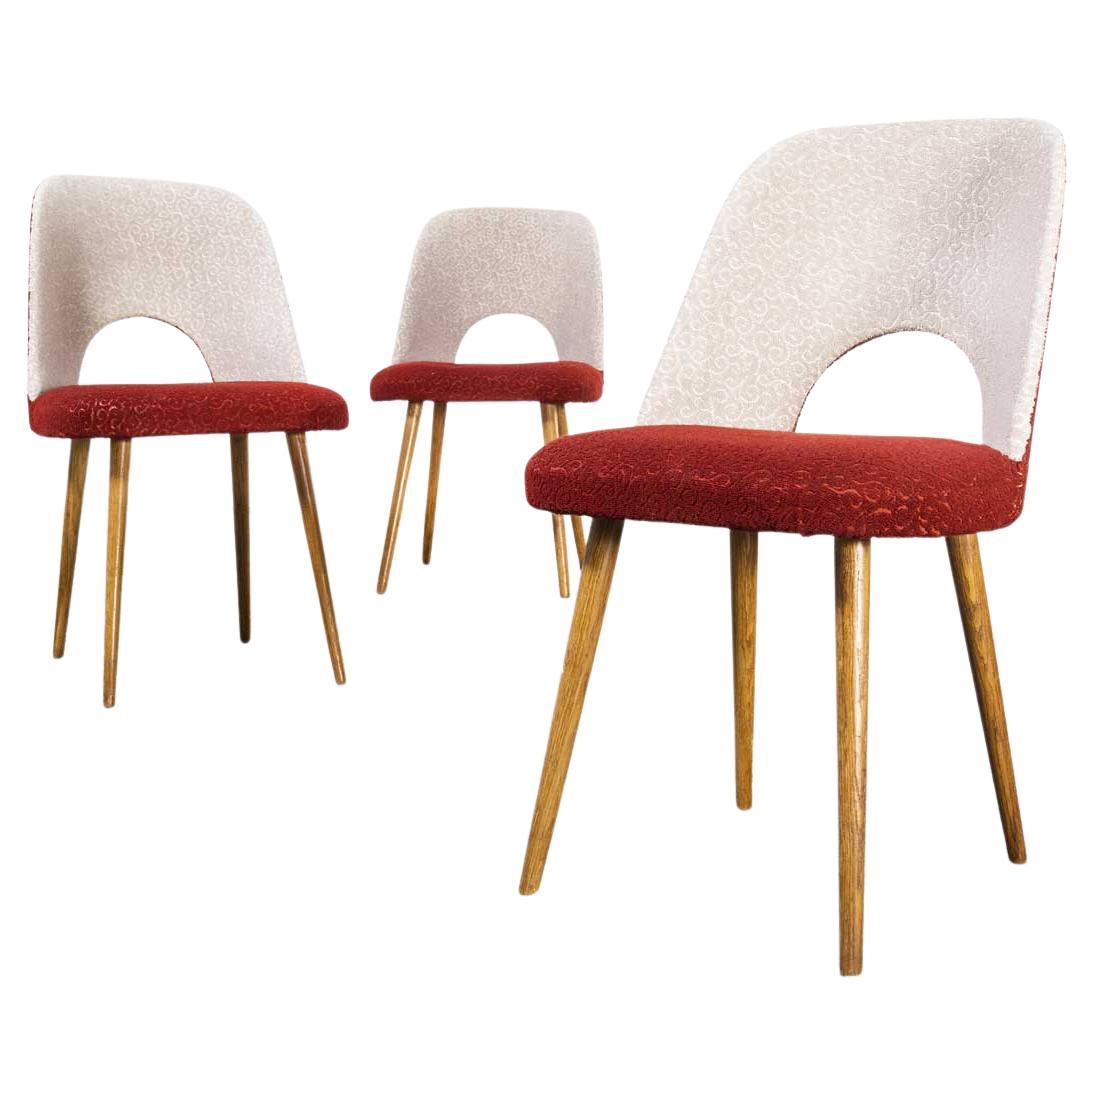 1960's Set of Three Upholstered Dining Chairs, Oswald Haerdtl